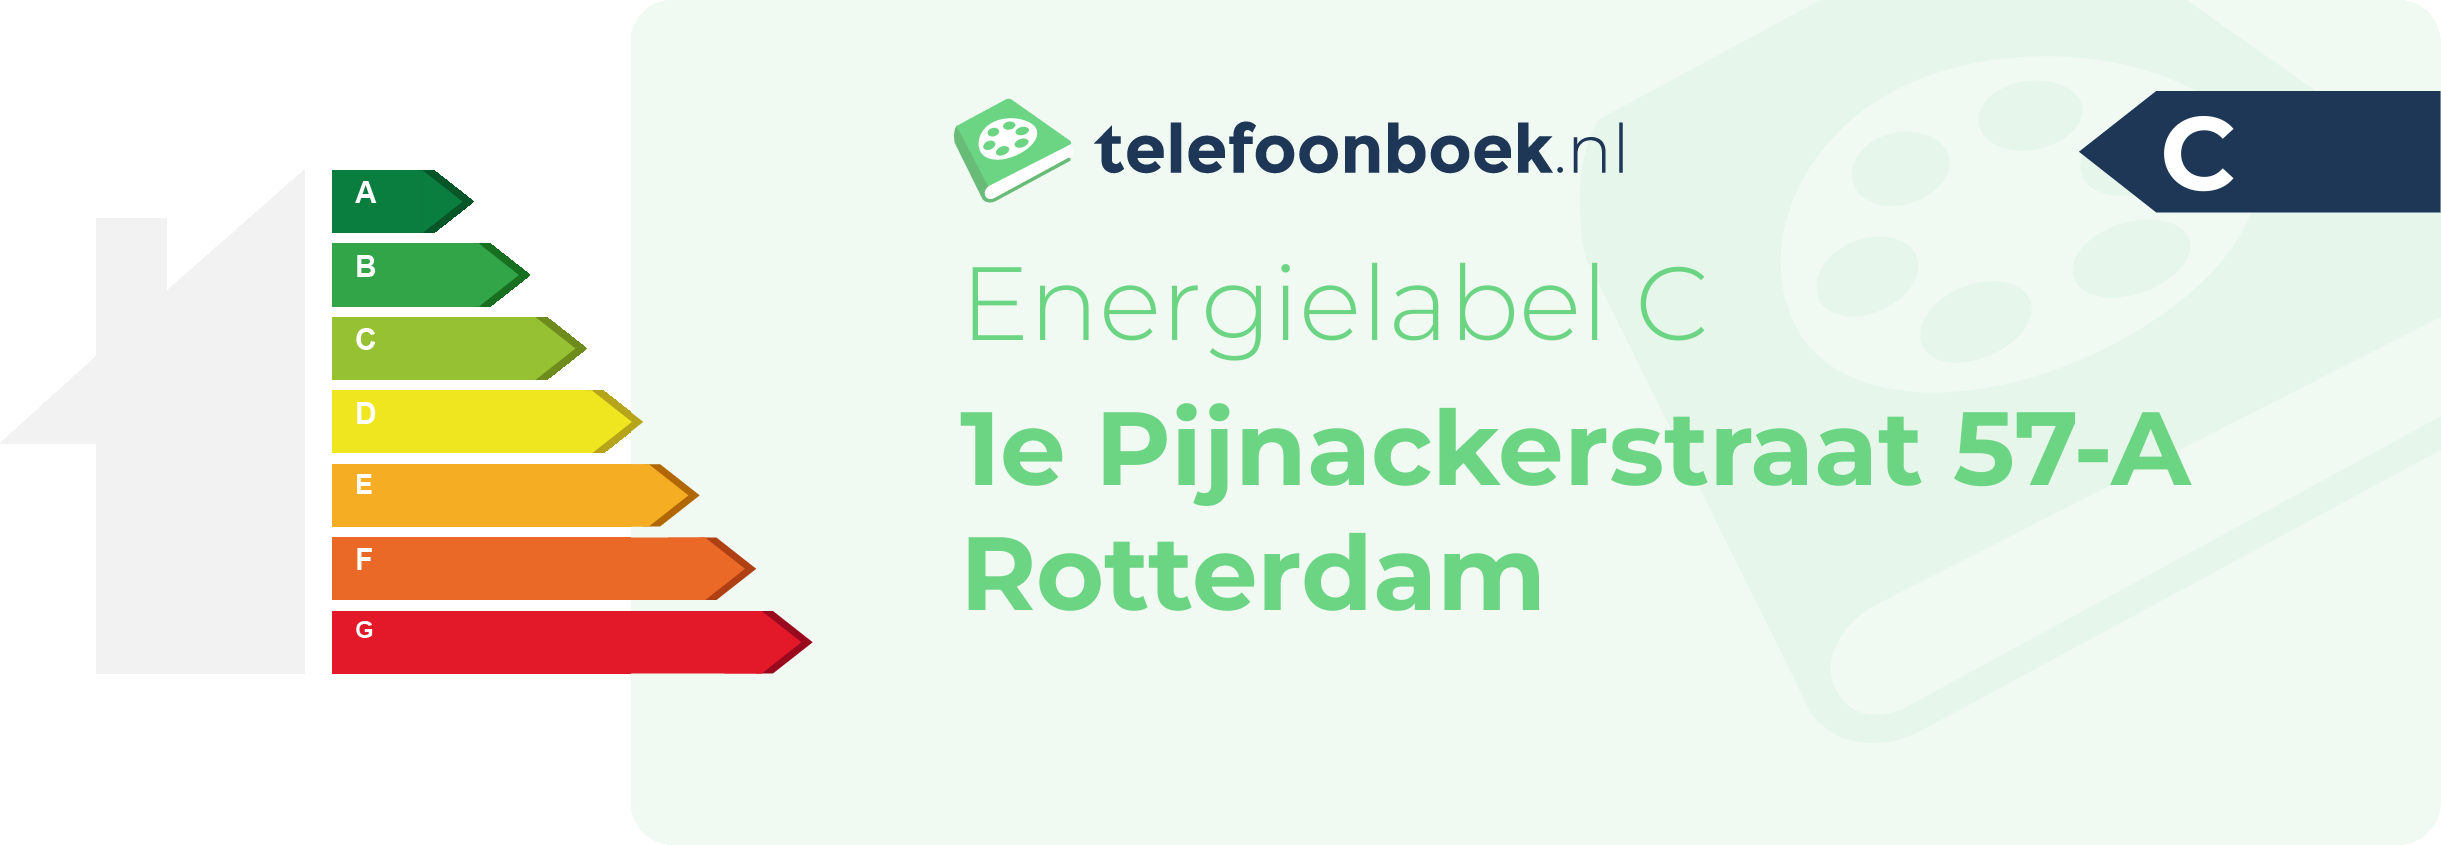 Energielabel 1e Pijnackerstraat 57-A Rotterdam